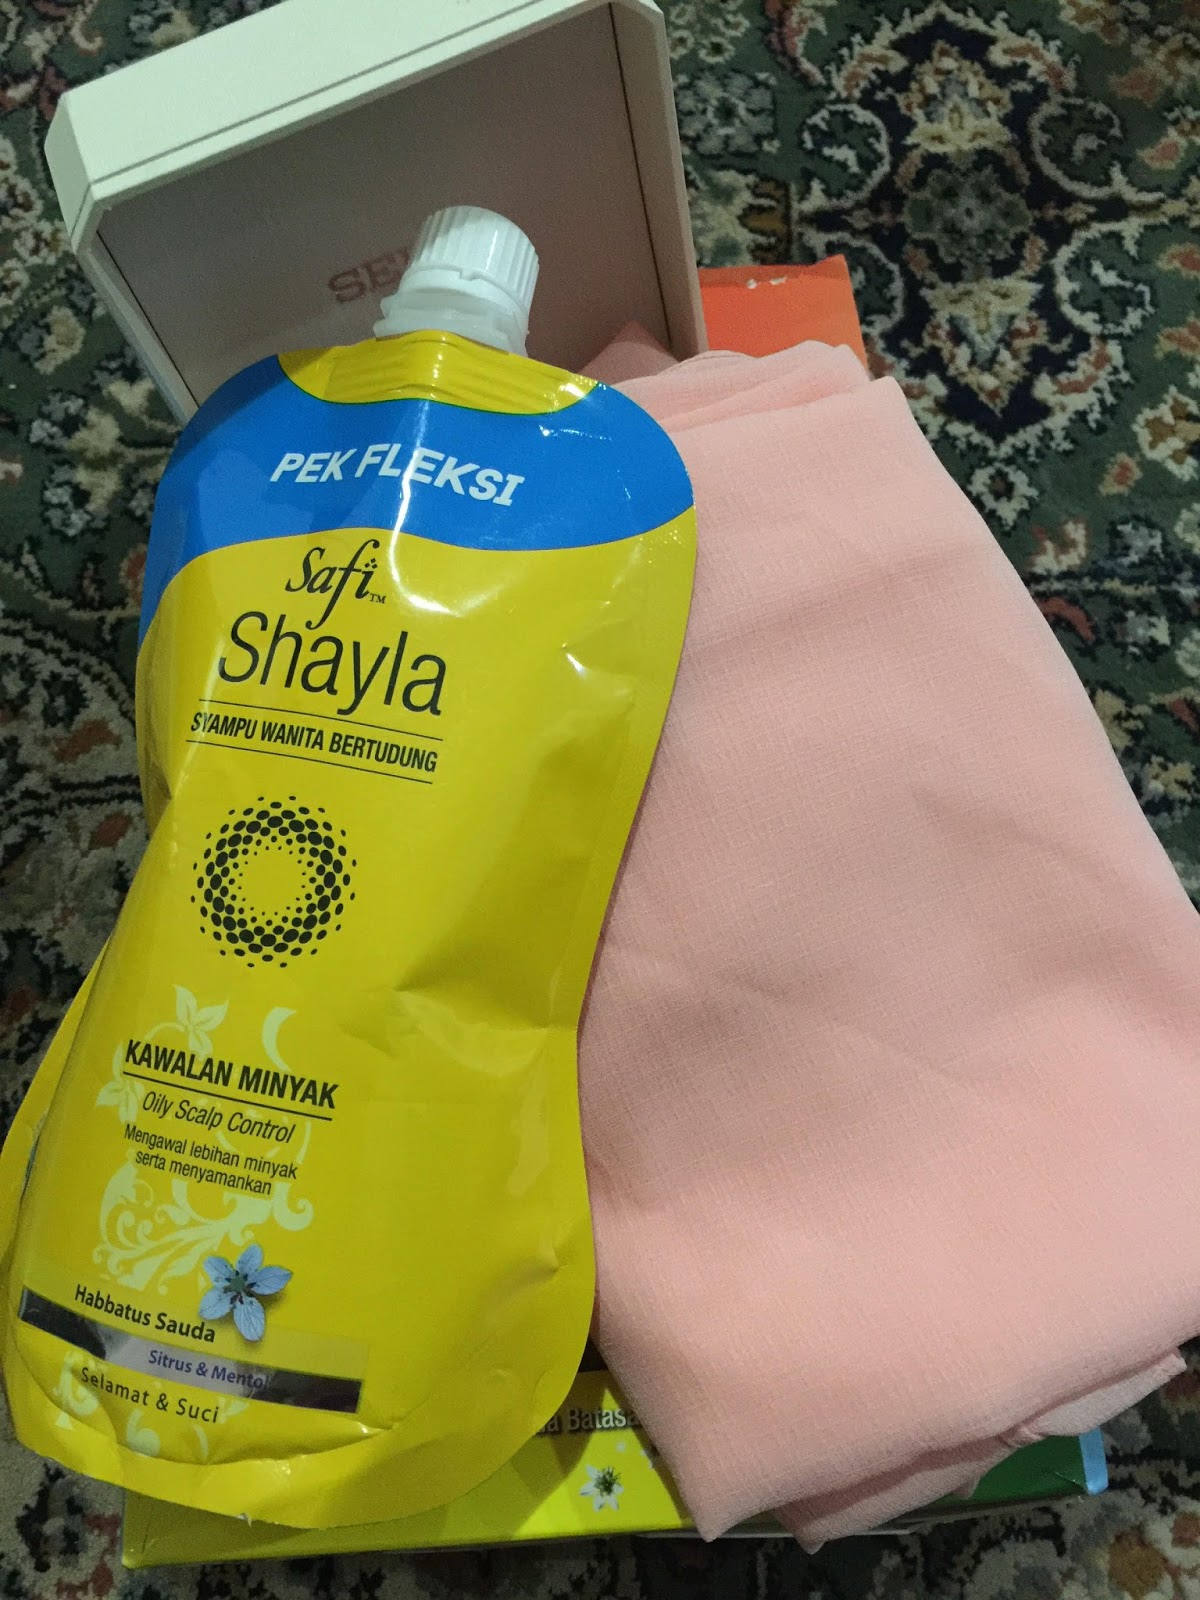 SAFI Shayla Pek Fleksi - Inovasi Syampu Terkini Wanita Bertudung